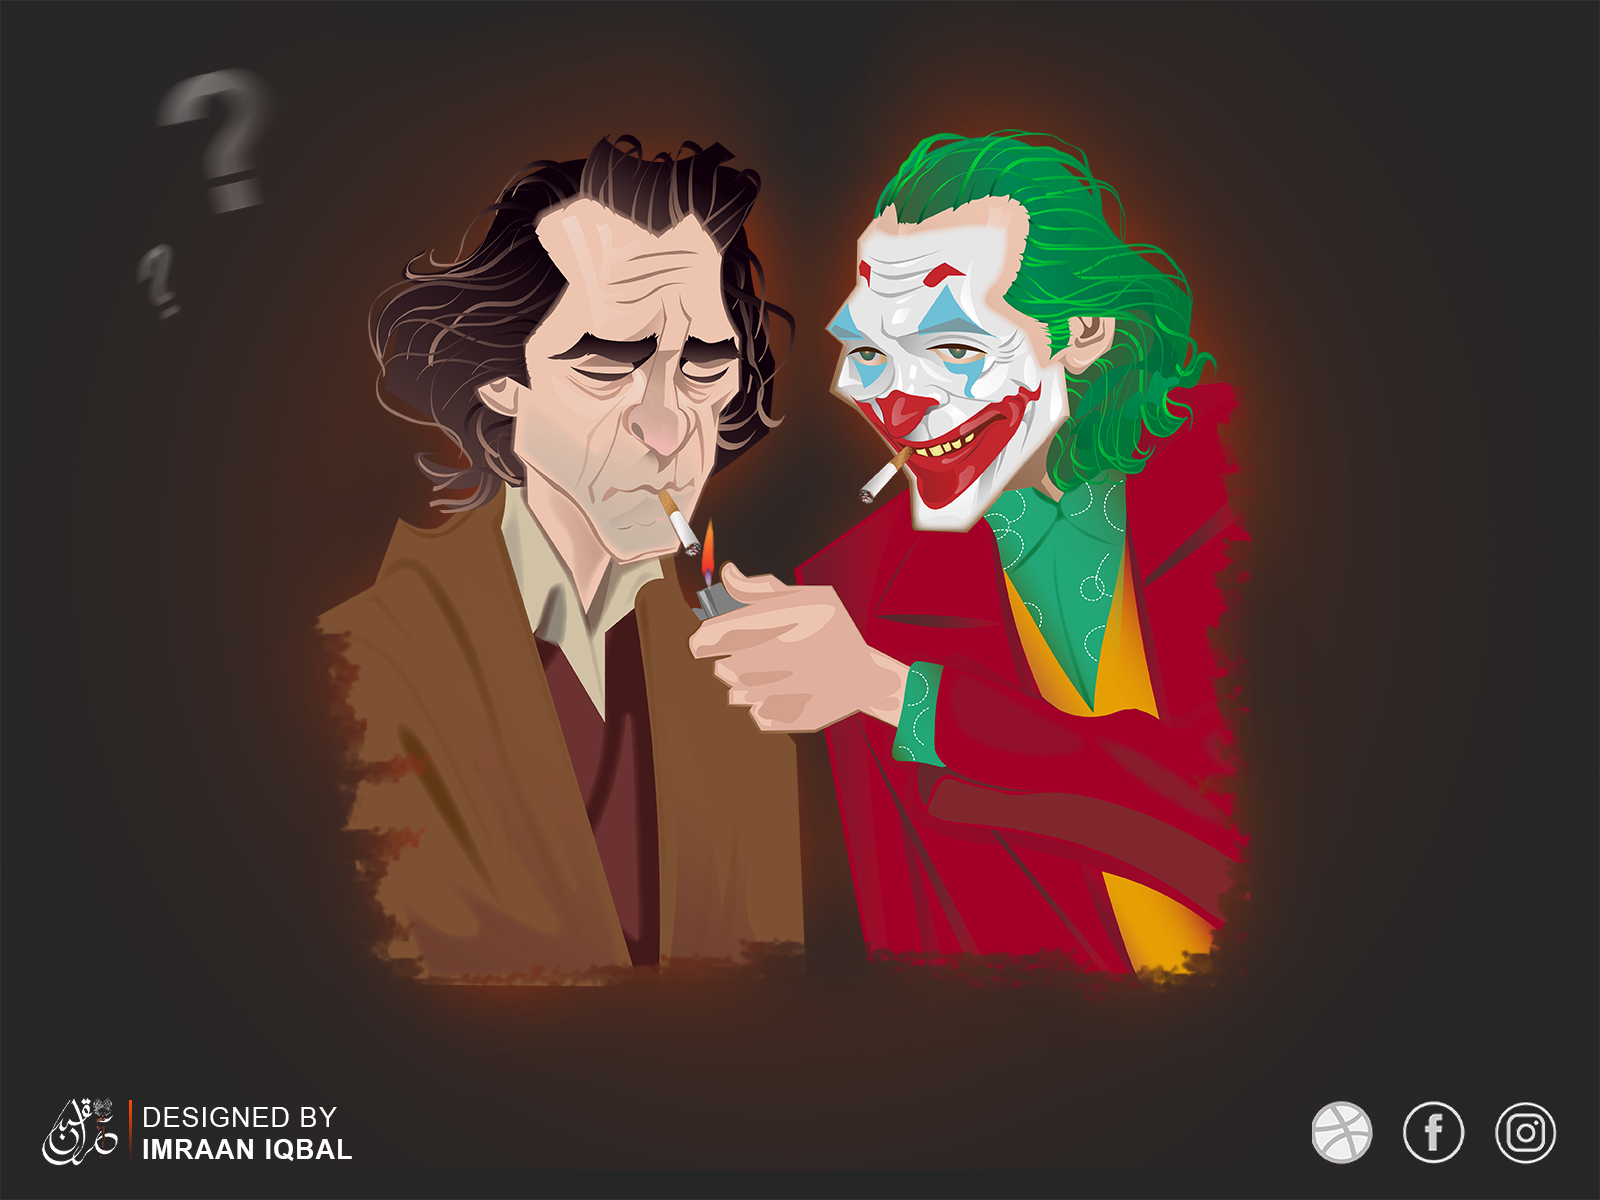 Joker illustration by Imraan Iqbal on Dribbble